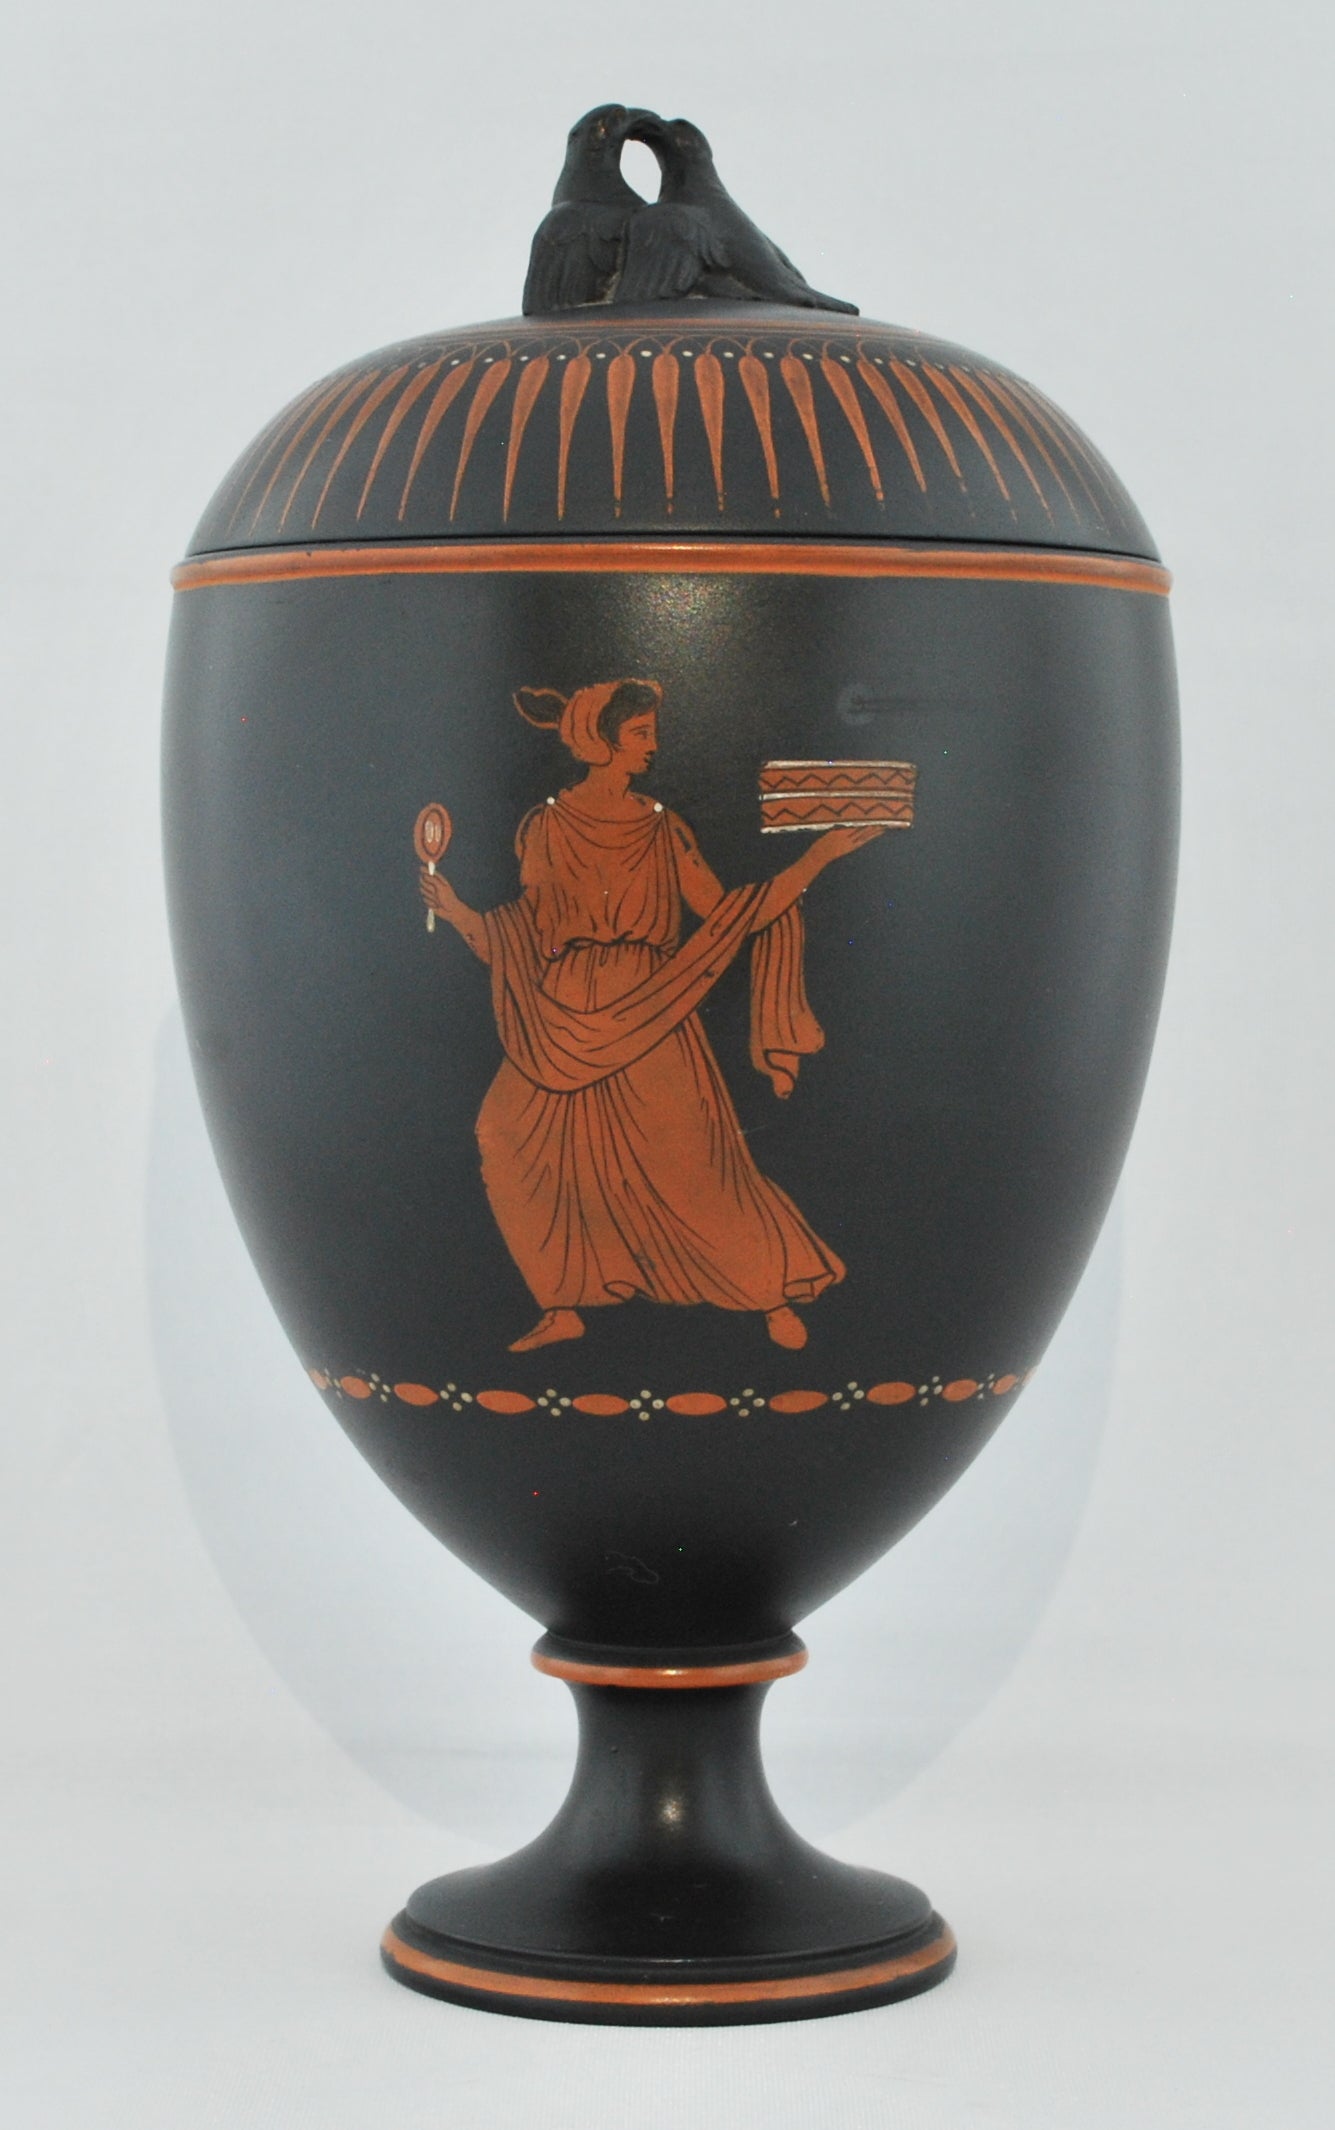 Encaustic painted ovoid vase